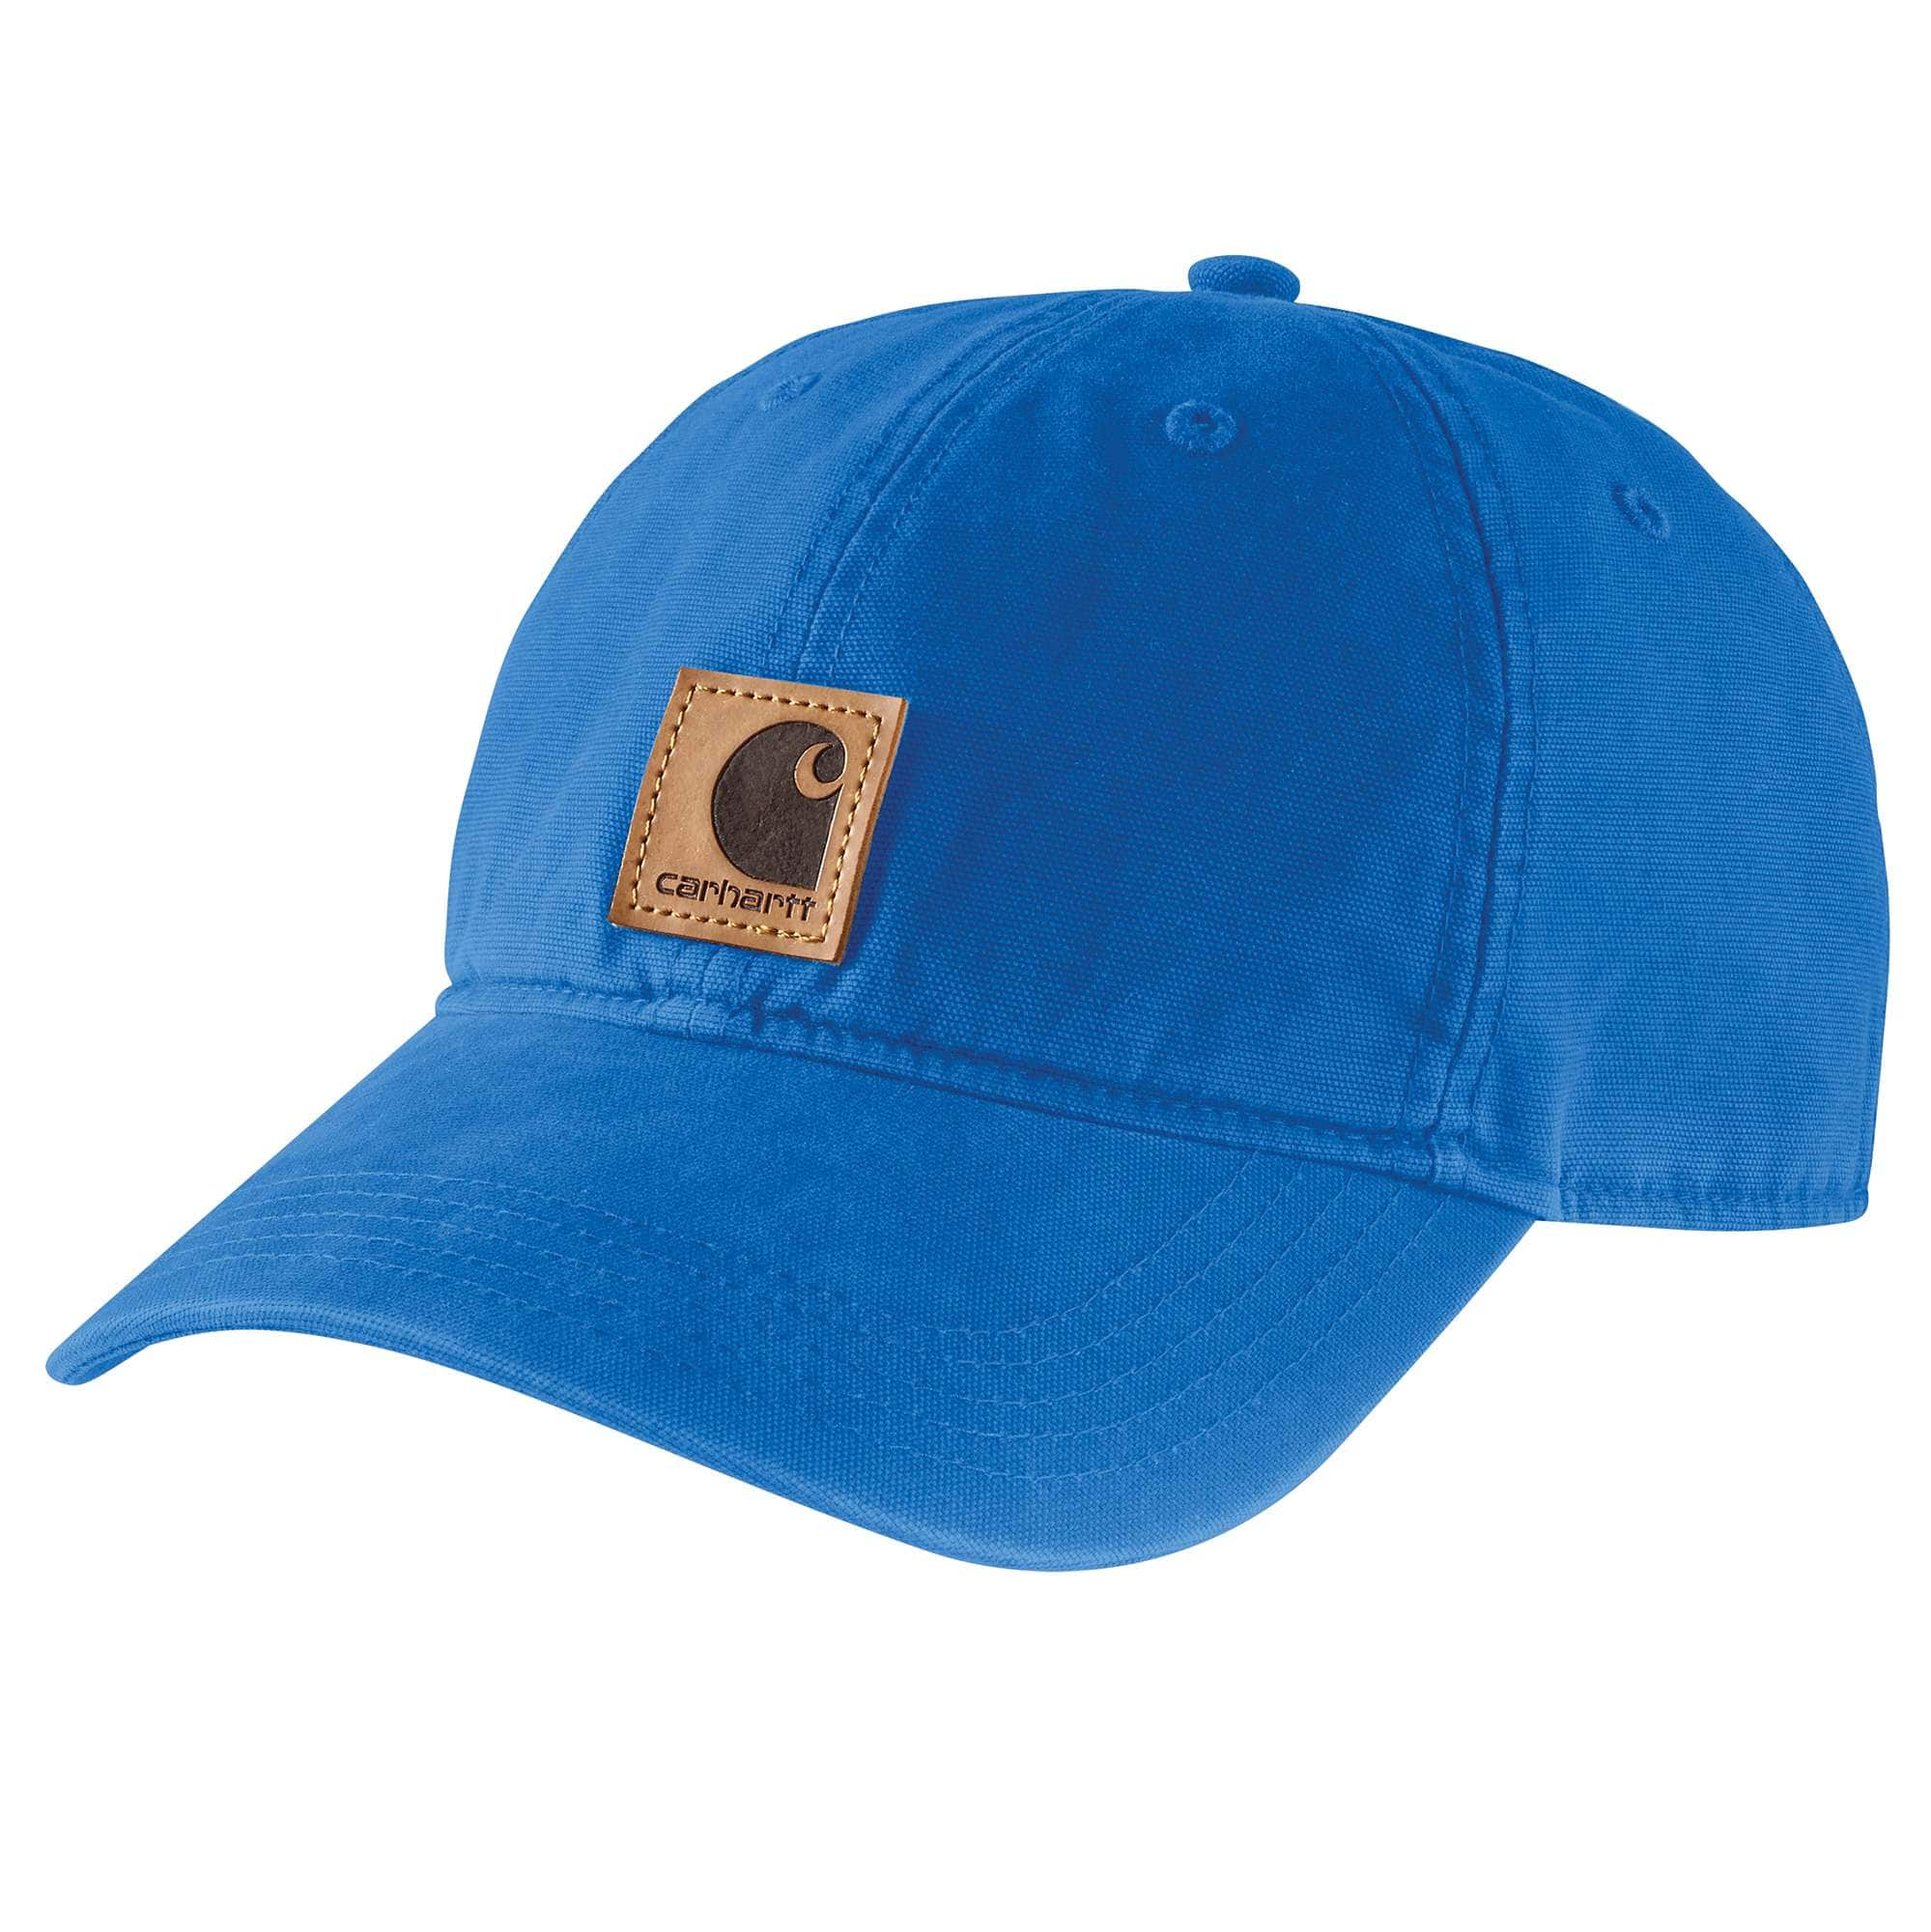 Hats & Caps Carhartt Wip Homme : Black Friday Jusqu'à - 40